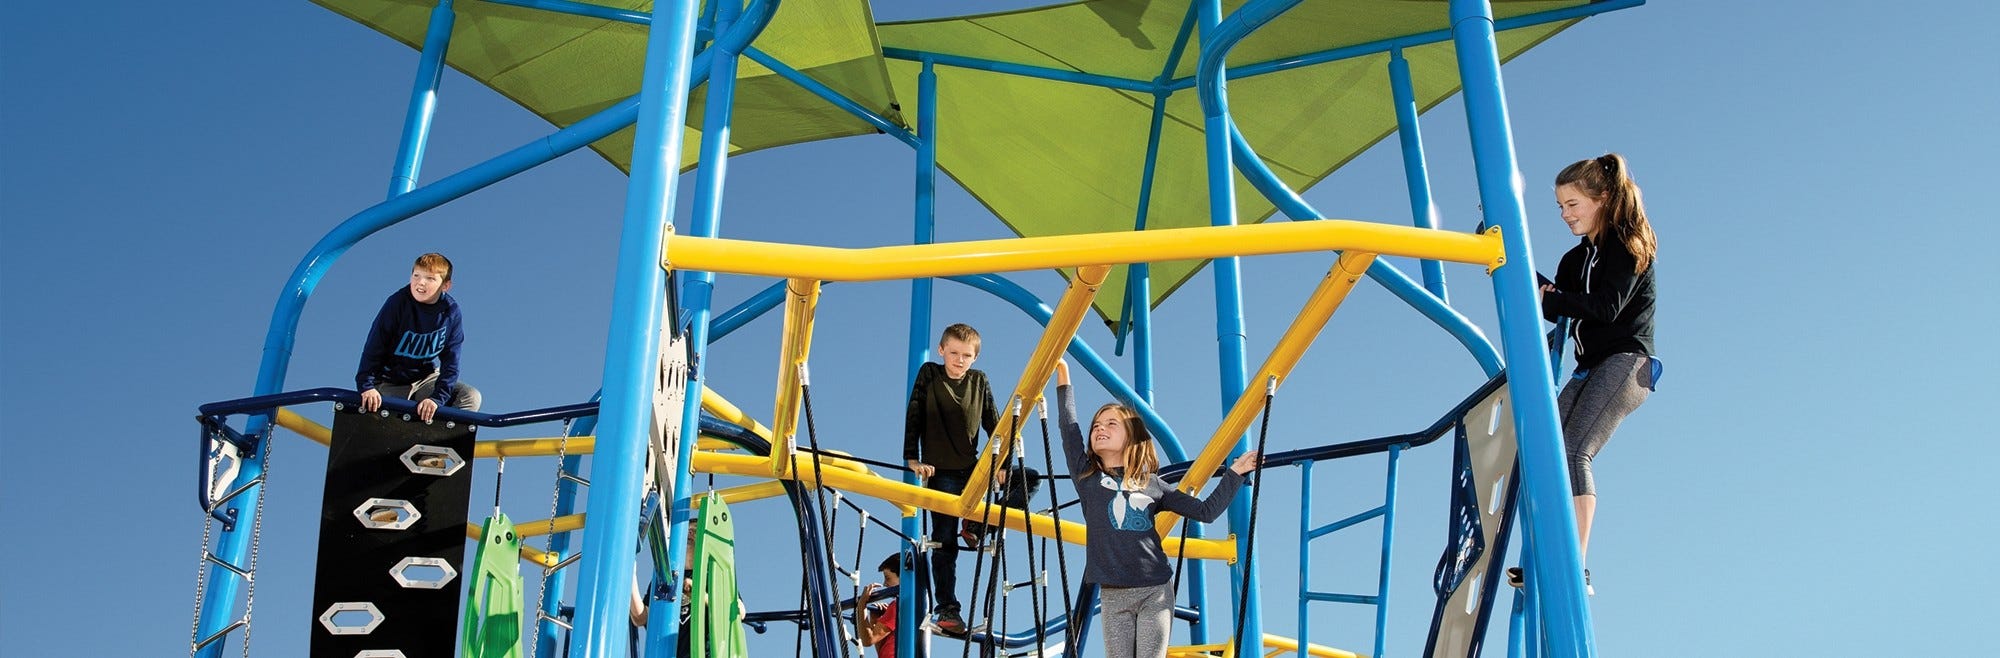 Children climb and explore a playground system